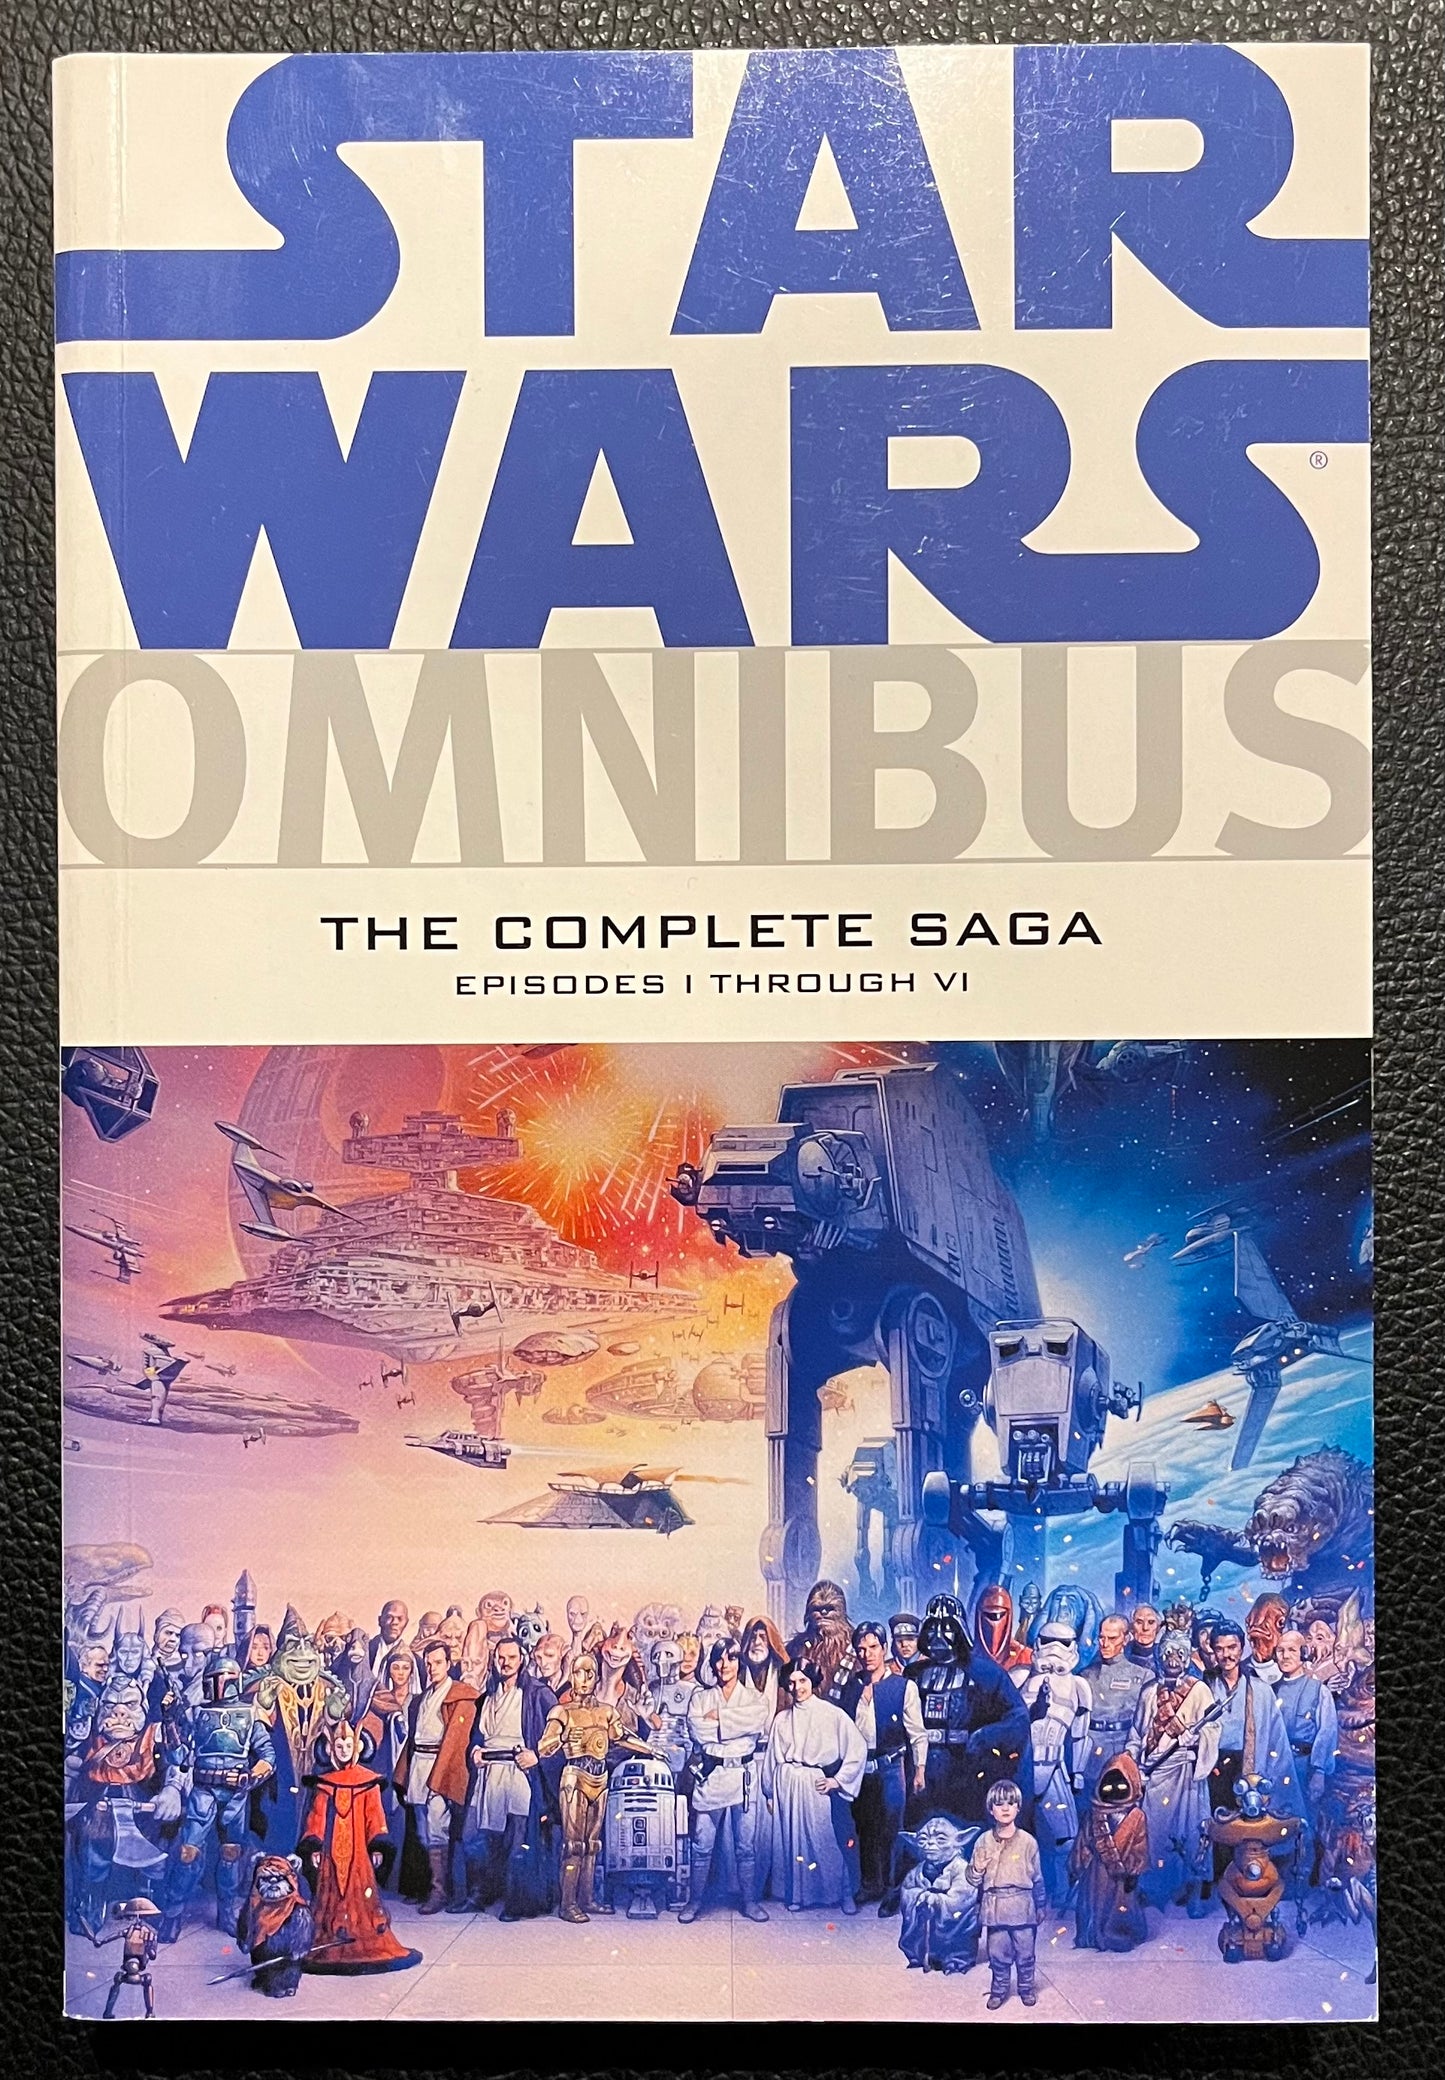 Star Wars Omnibus Episodes I-VI The Complete Saga